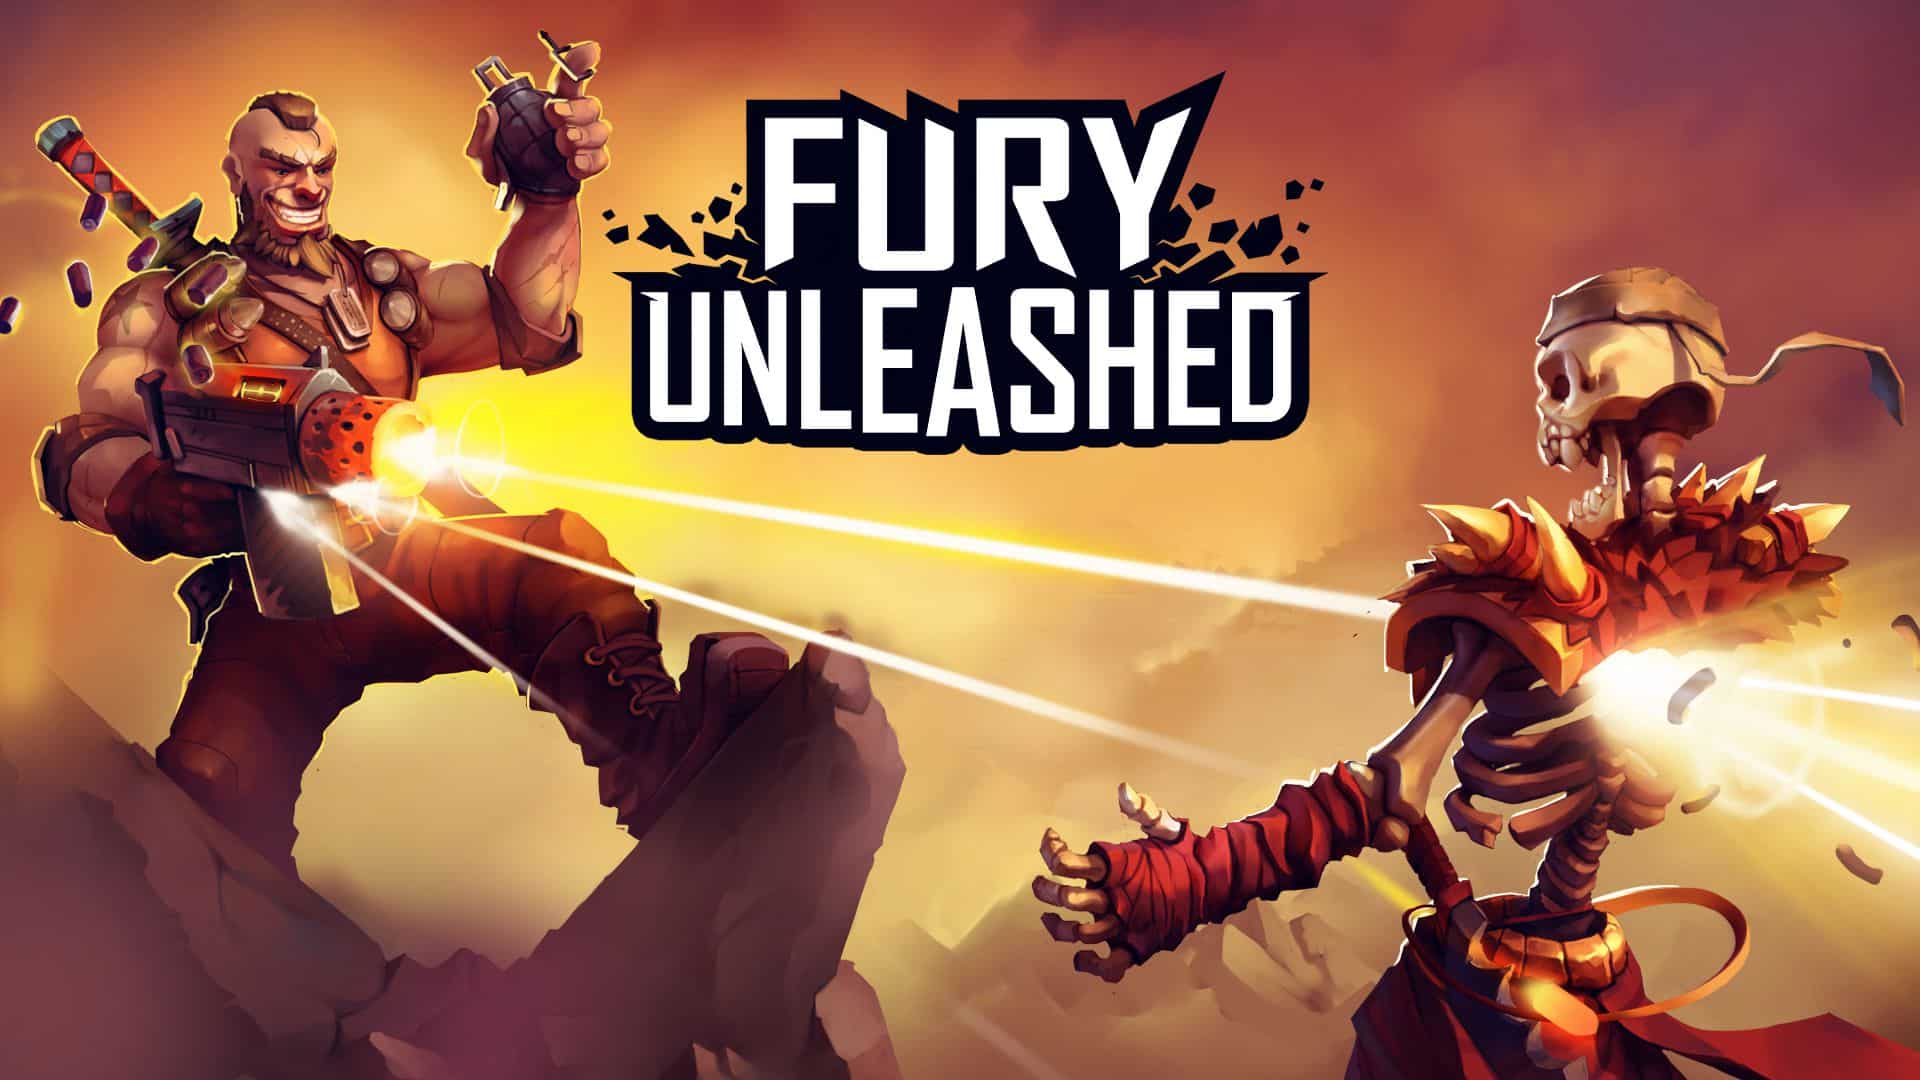 Fury unleashed está rumando a outro nível | 1602057f fury unleashed keyart | married games hot wheels | hot wheels | fury unleashed